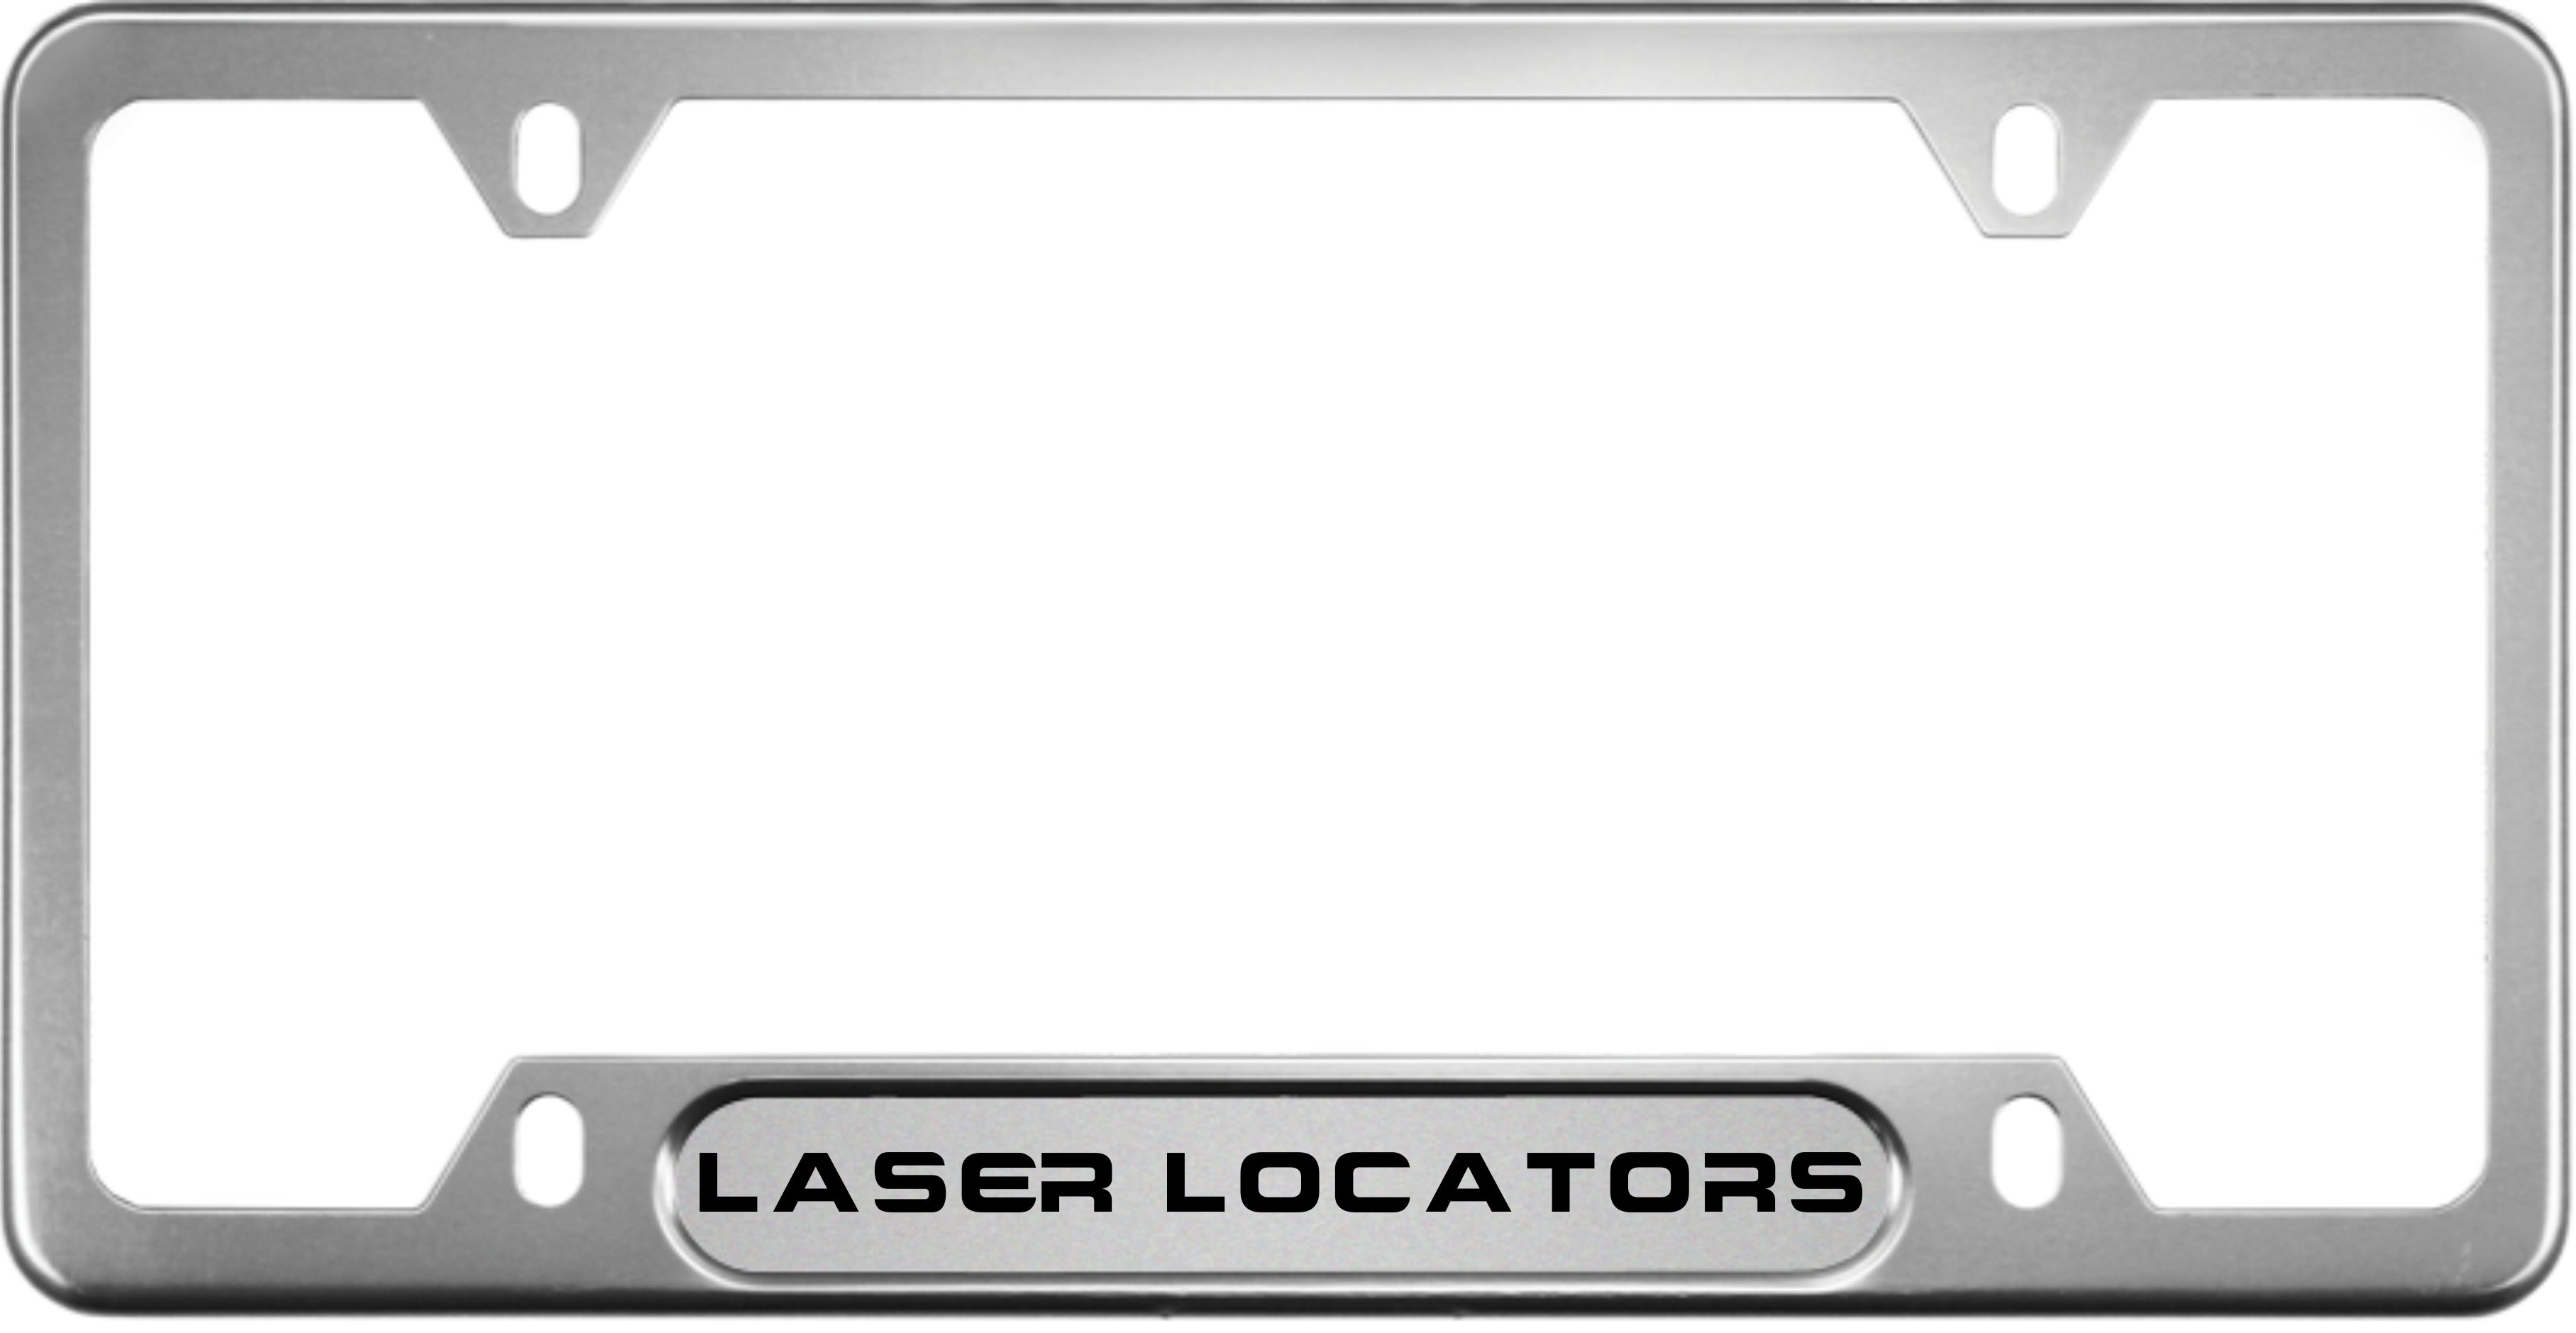 Laser Locators - Anodized Aluminum License Plate Frame - Silver